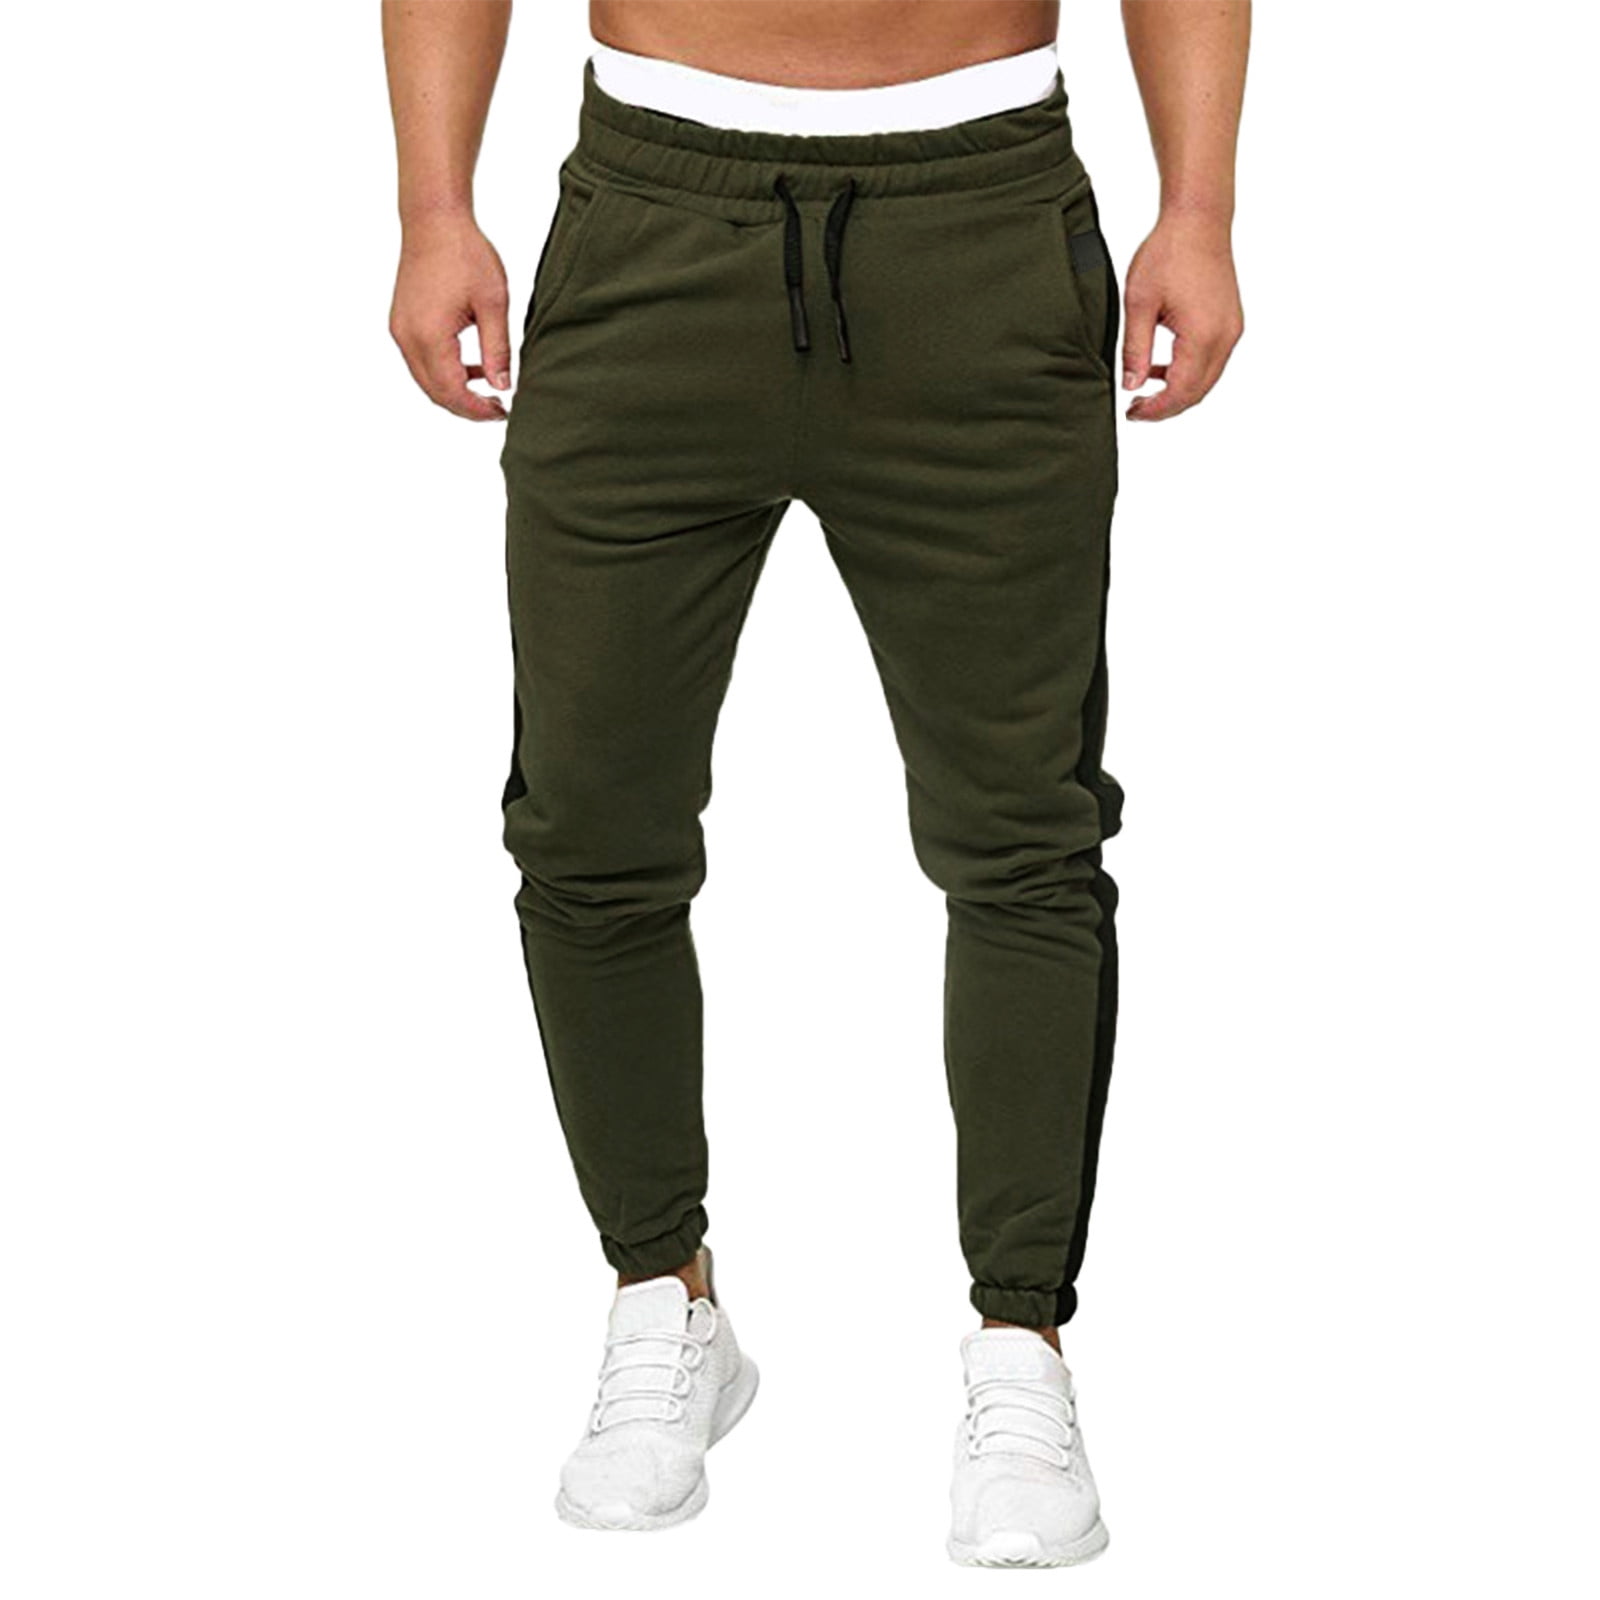 Aayomet Sweatpants For Men Jogger Men's Joggers Pants with Deep Pockets ...